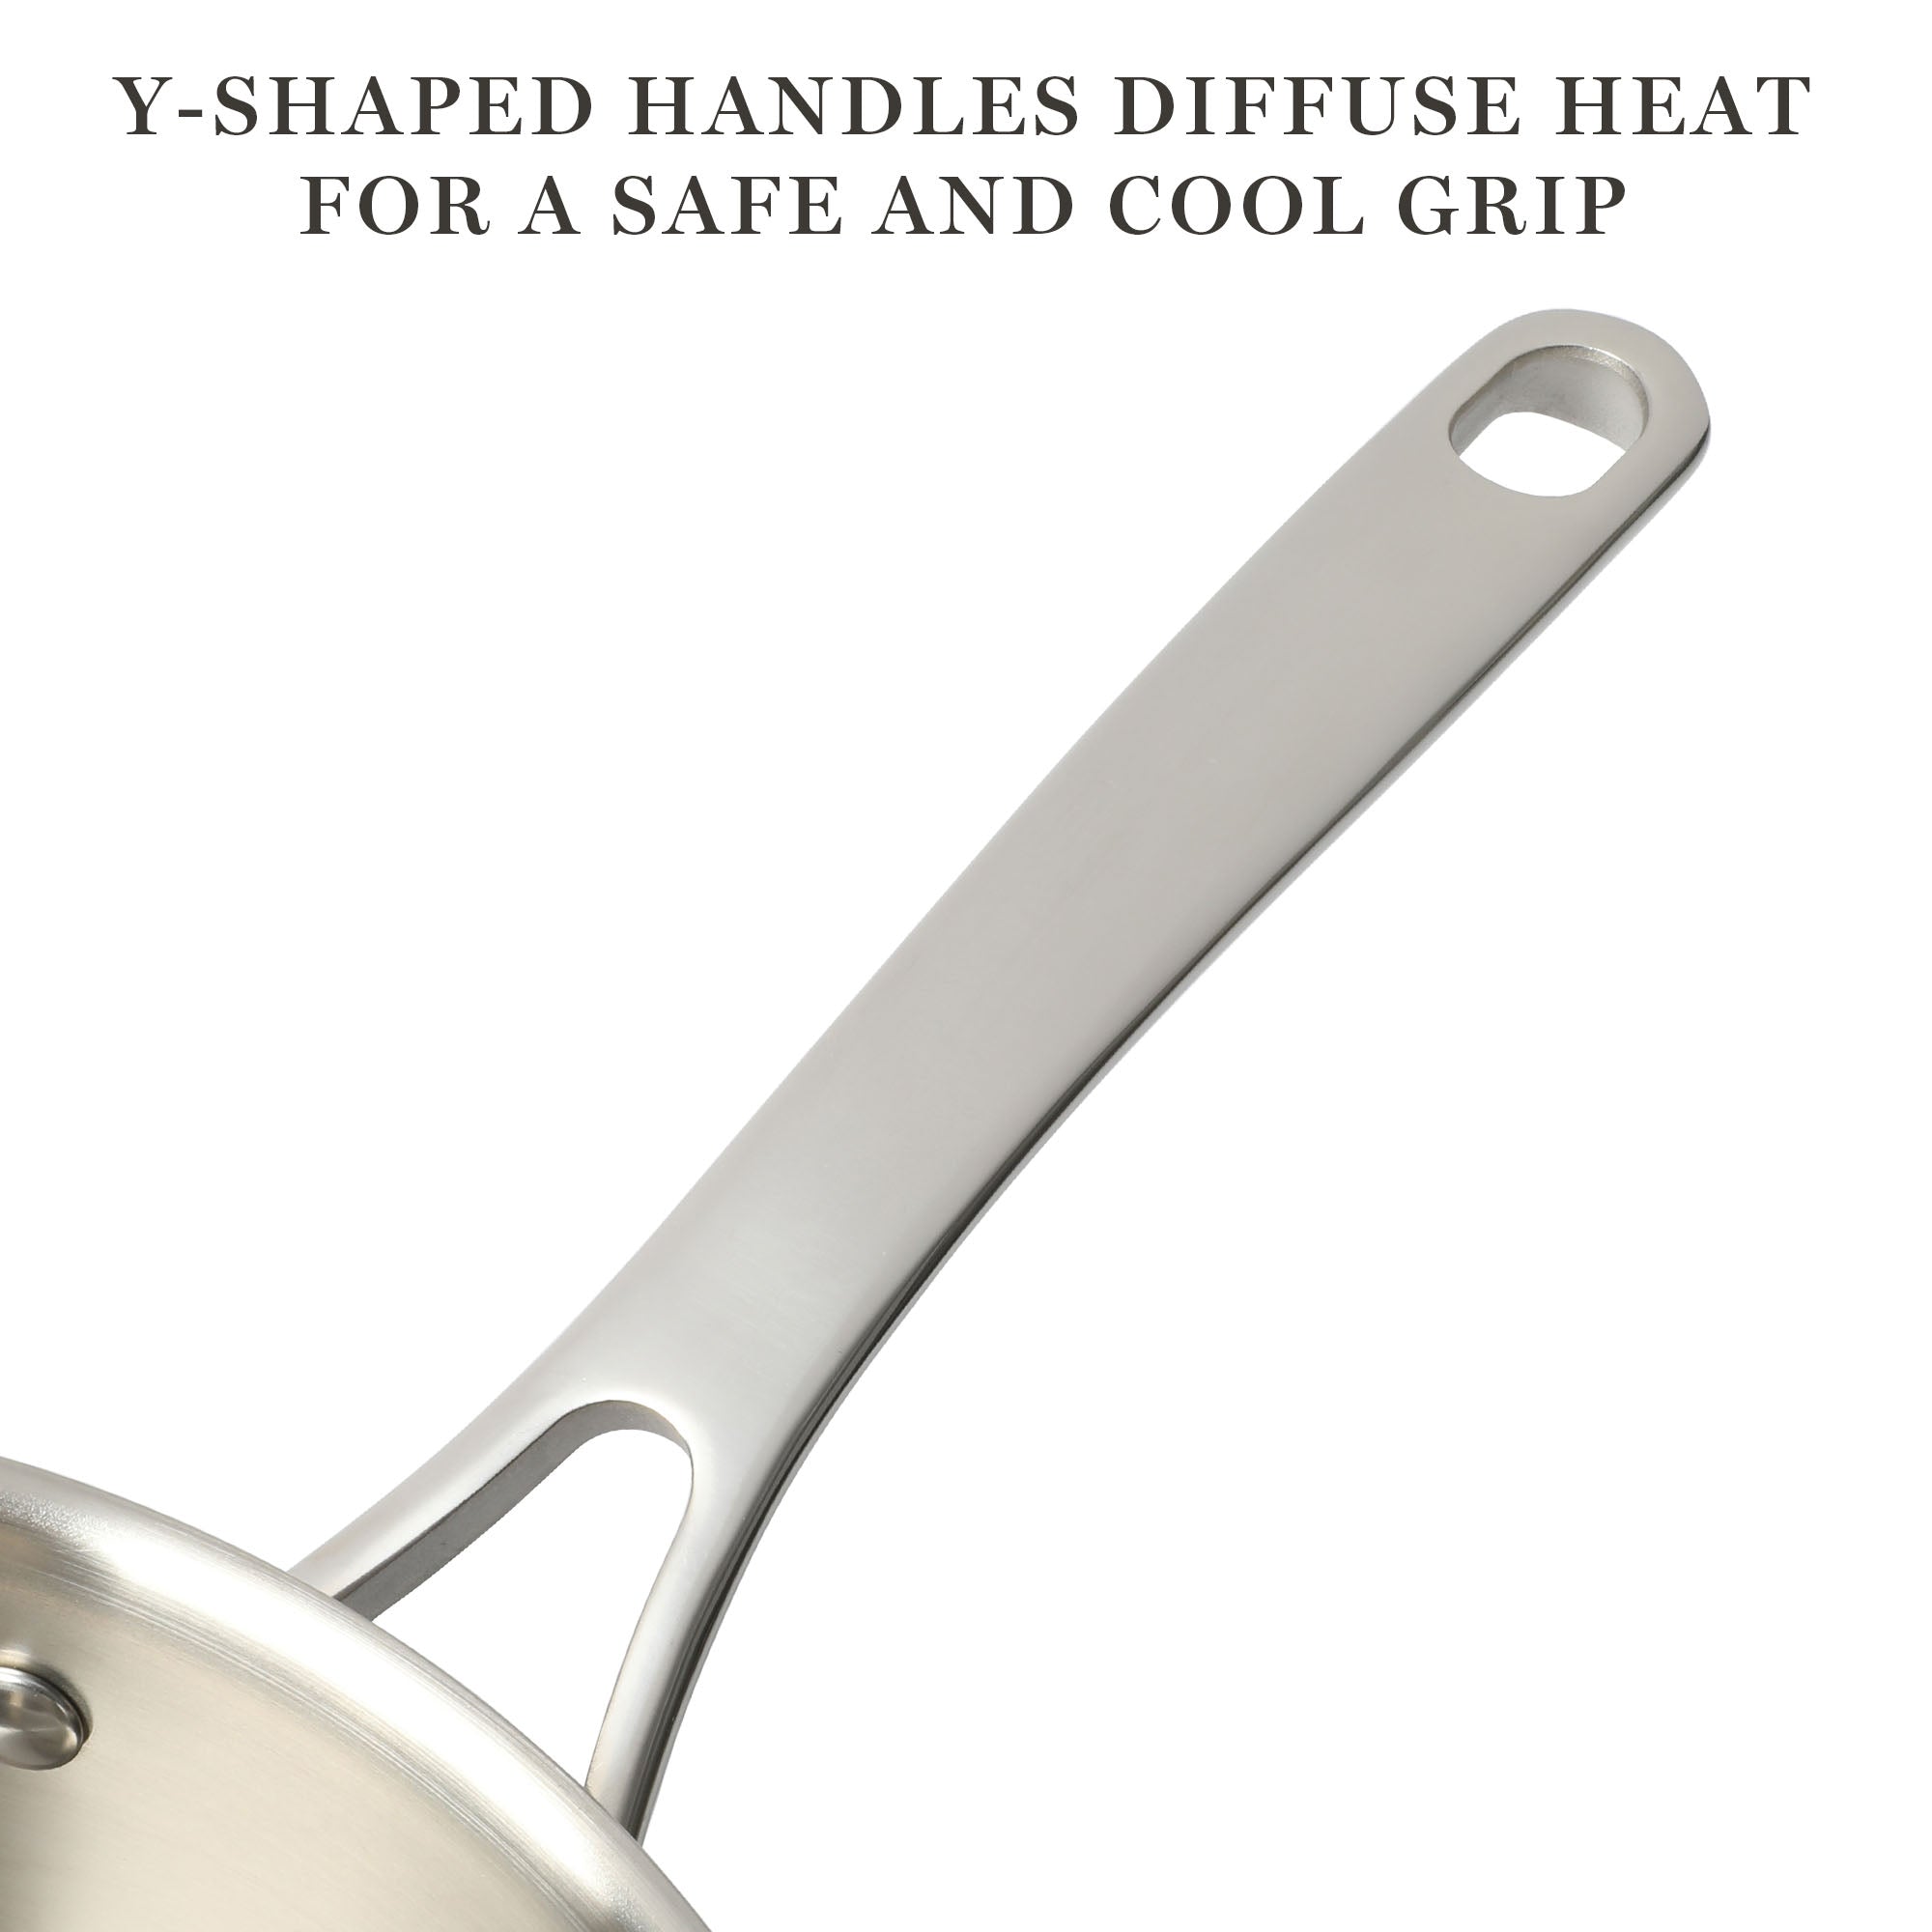 Martha Stewart Castelle 3.5-Quart Stainless Steel Sauce Pan